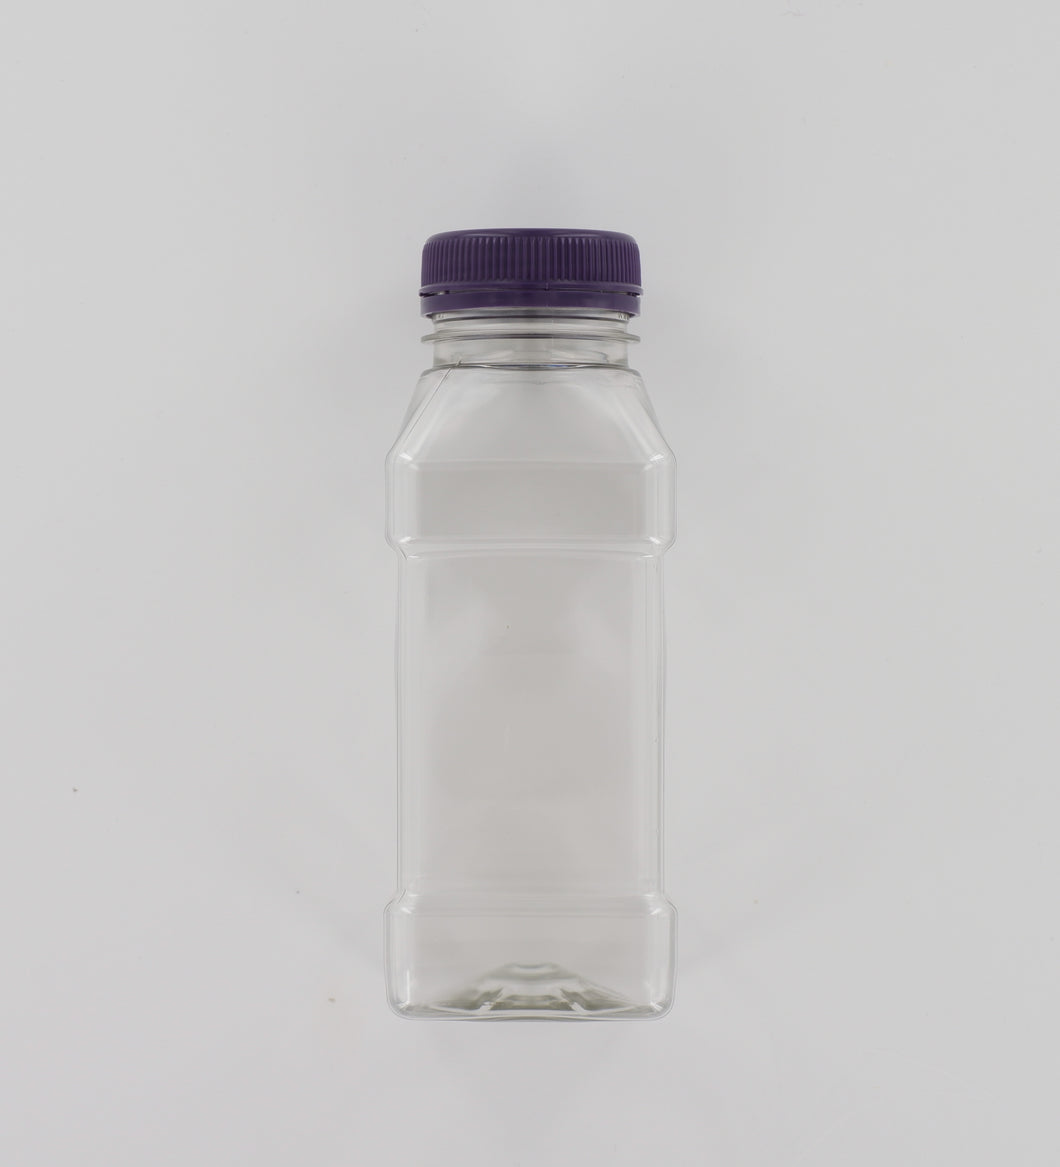 250ml Square bottle with purple cap